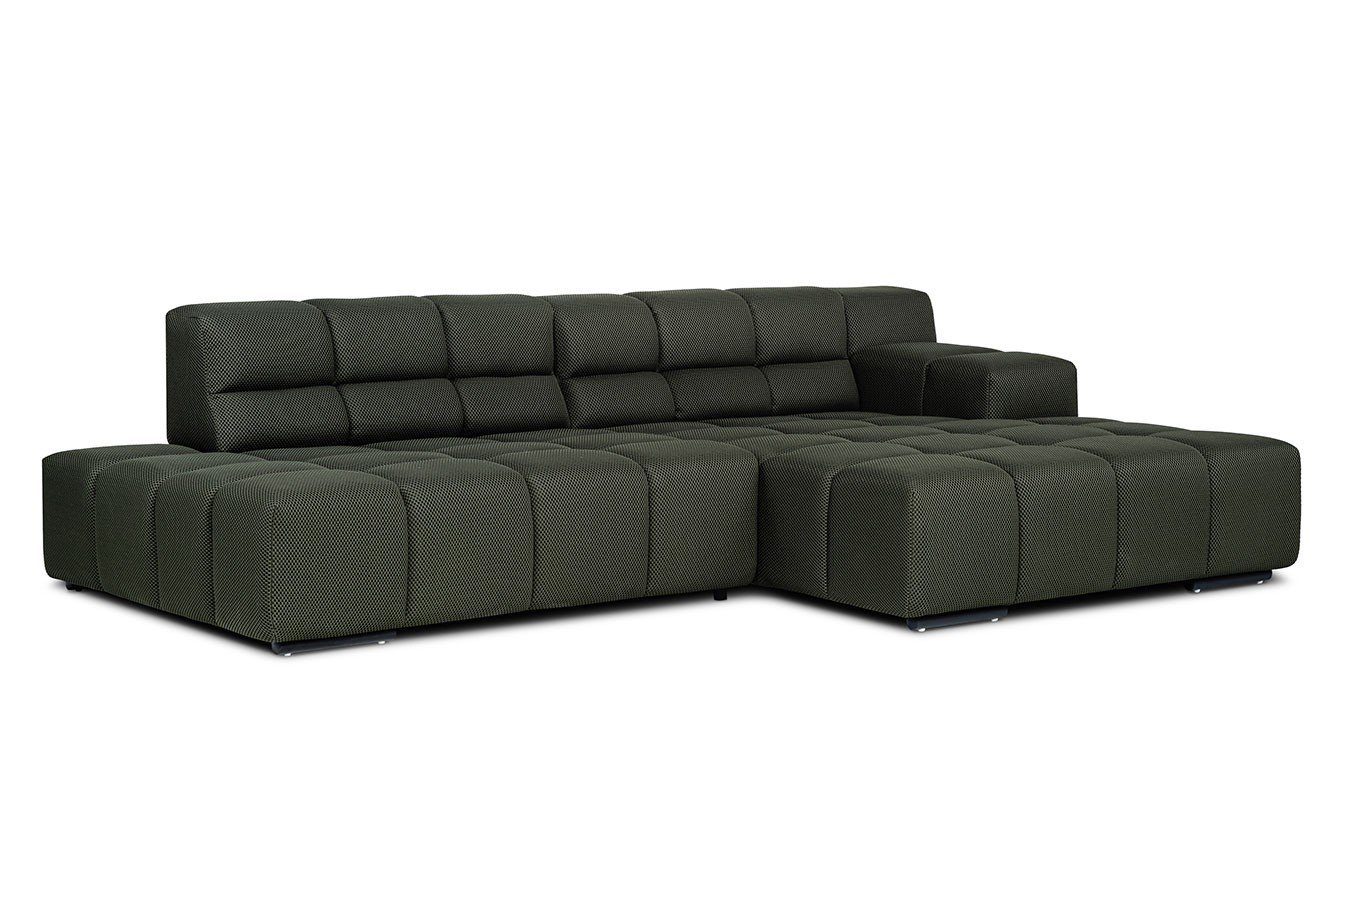 Big-Sofa dunkelgrün daslagerhaus Cube Ecksofa living Stoff